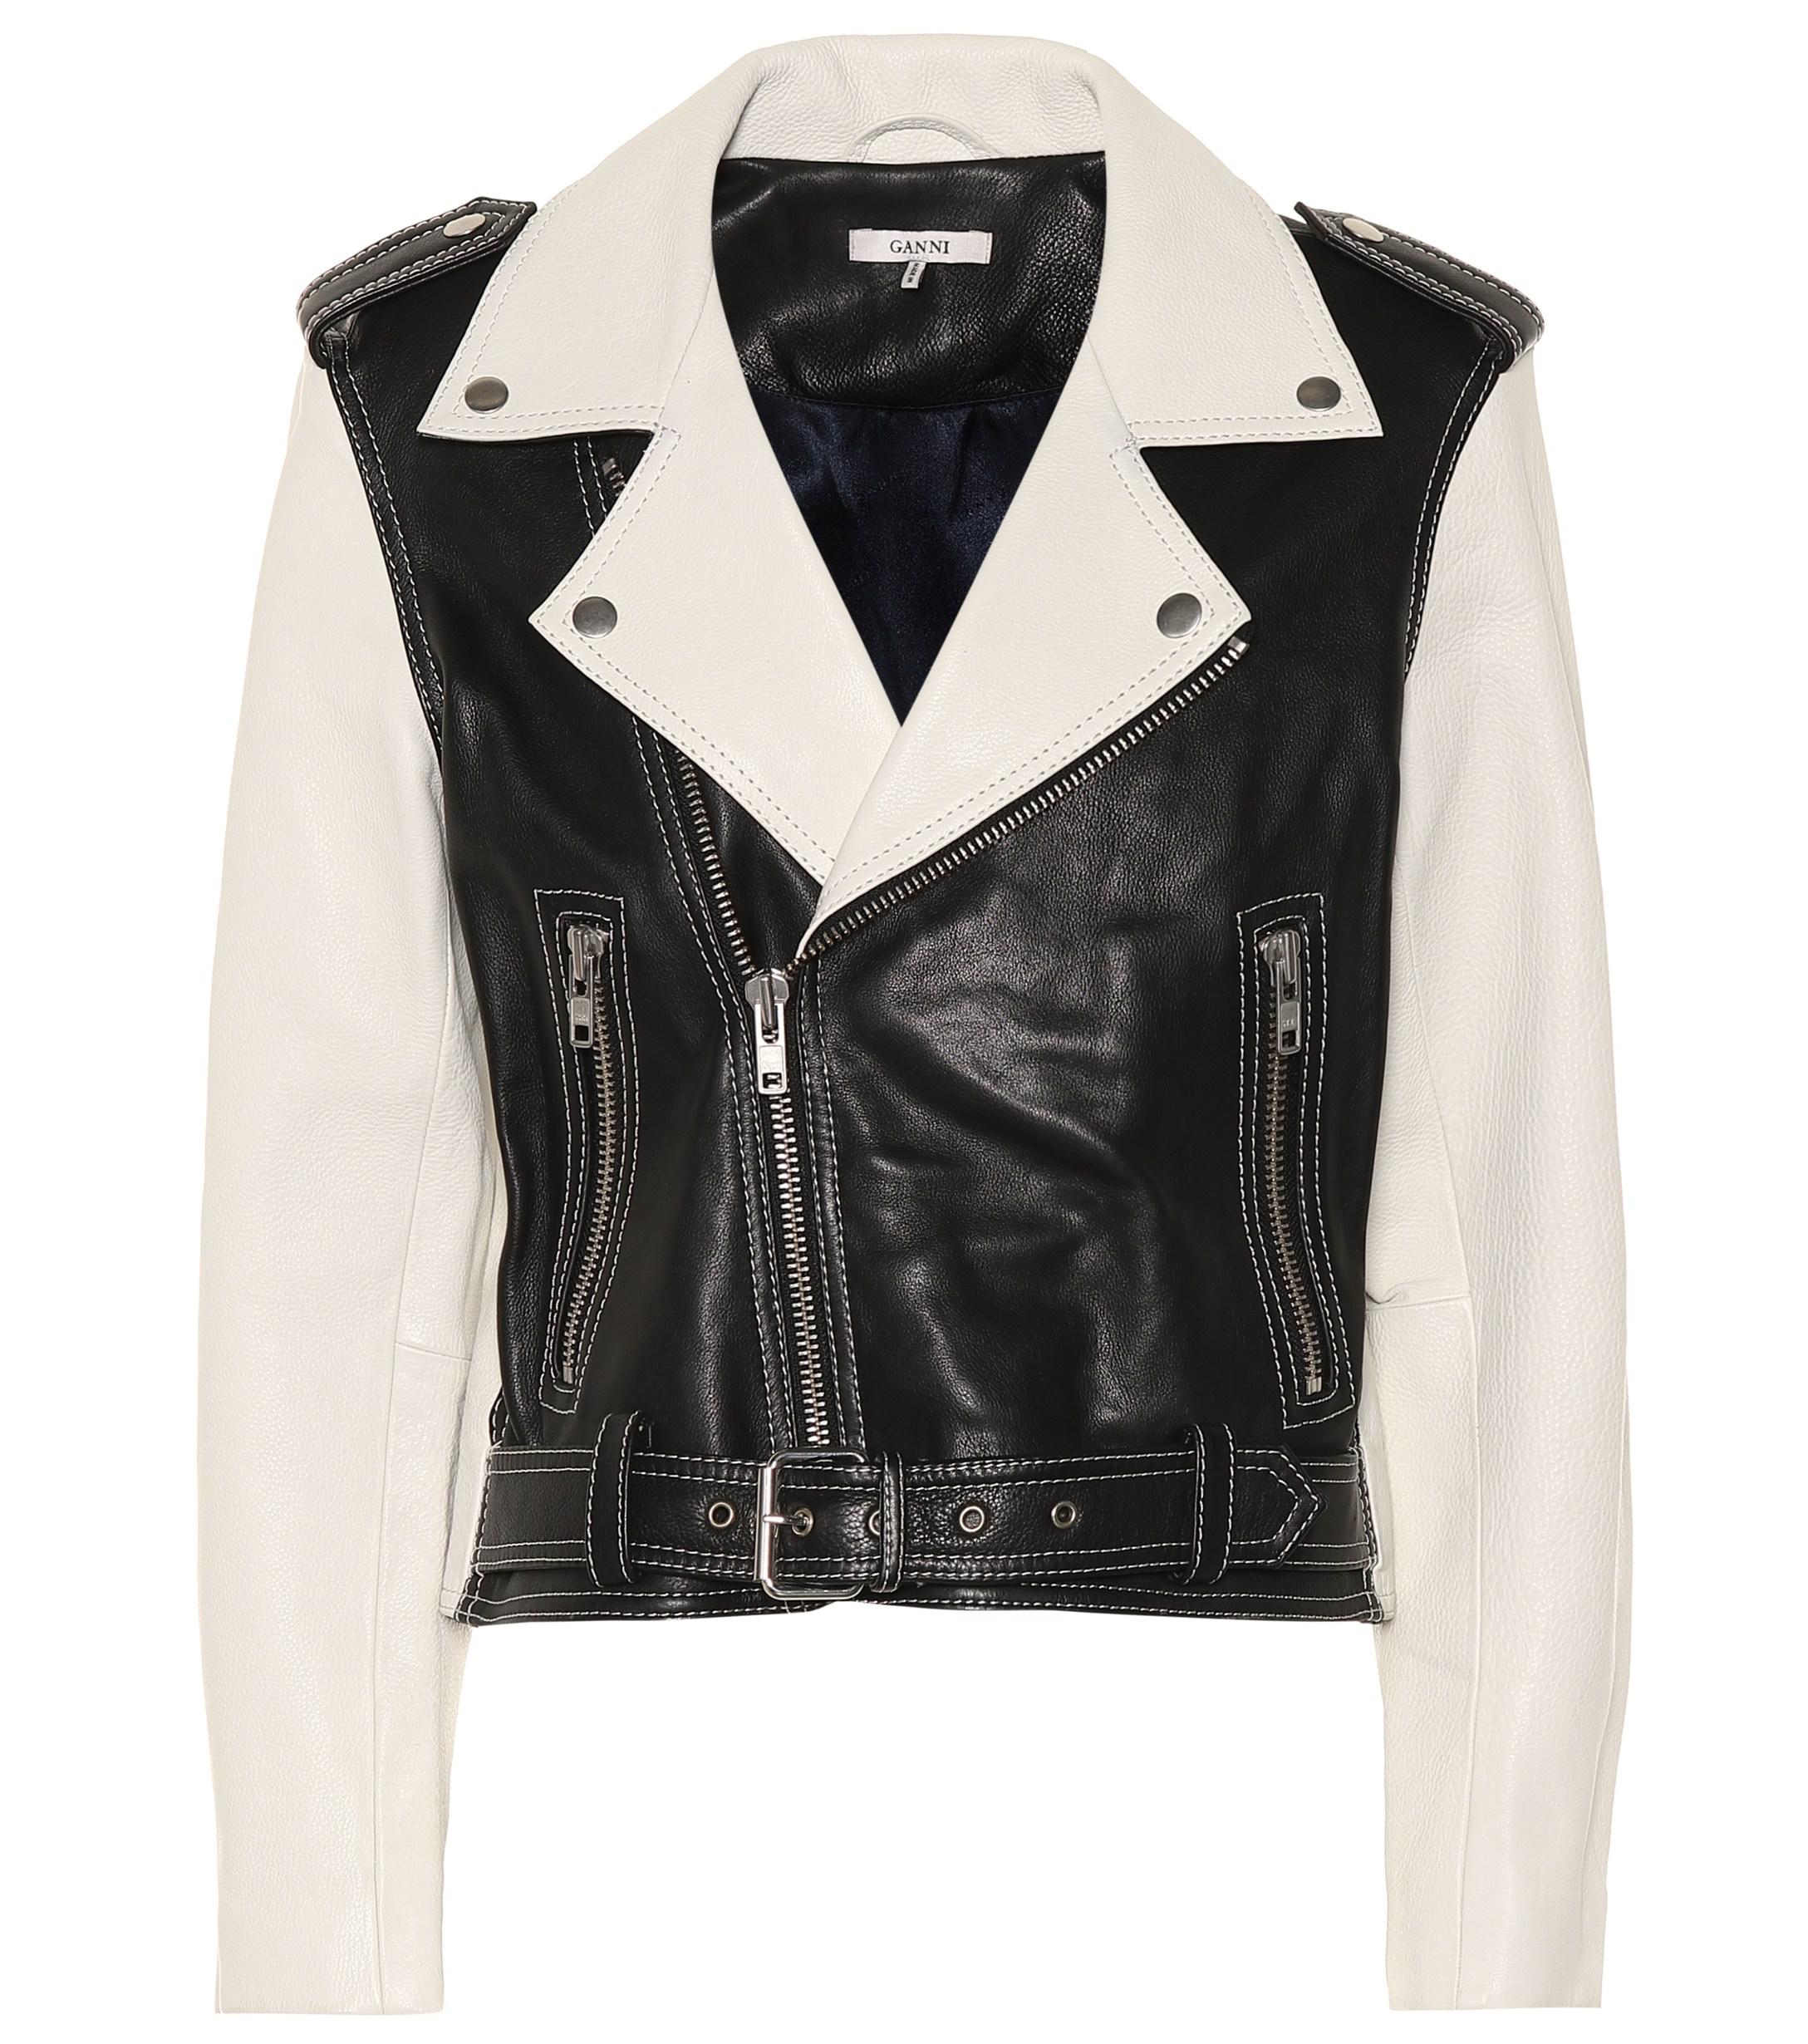 Ganni Heavy Grain Leather Biker Jacket in Black,White (Black) - Lyst